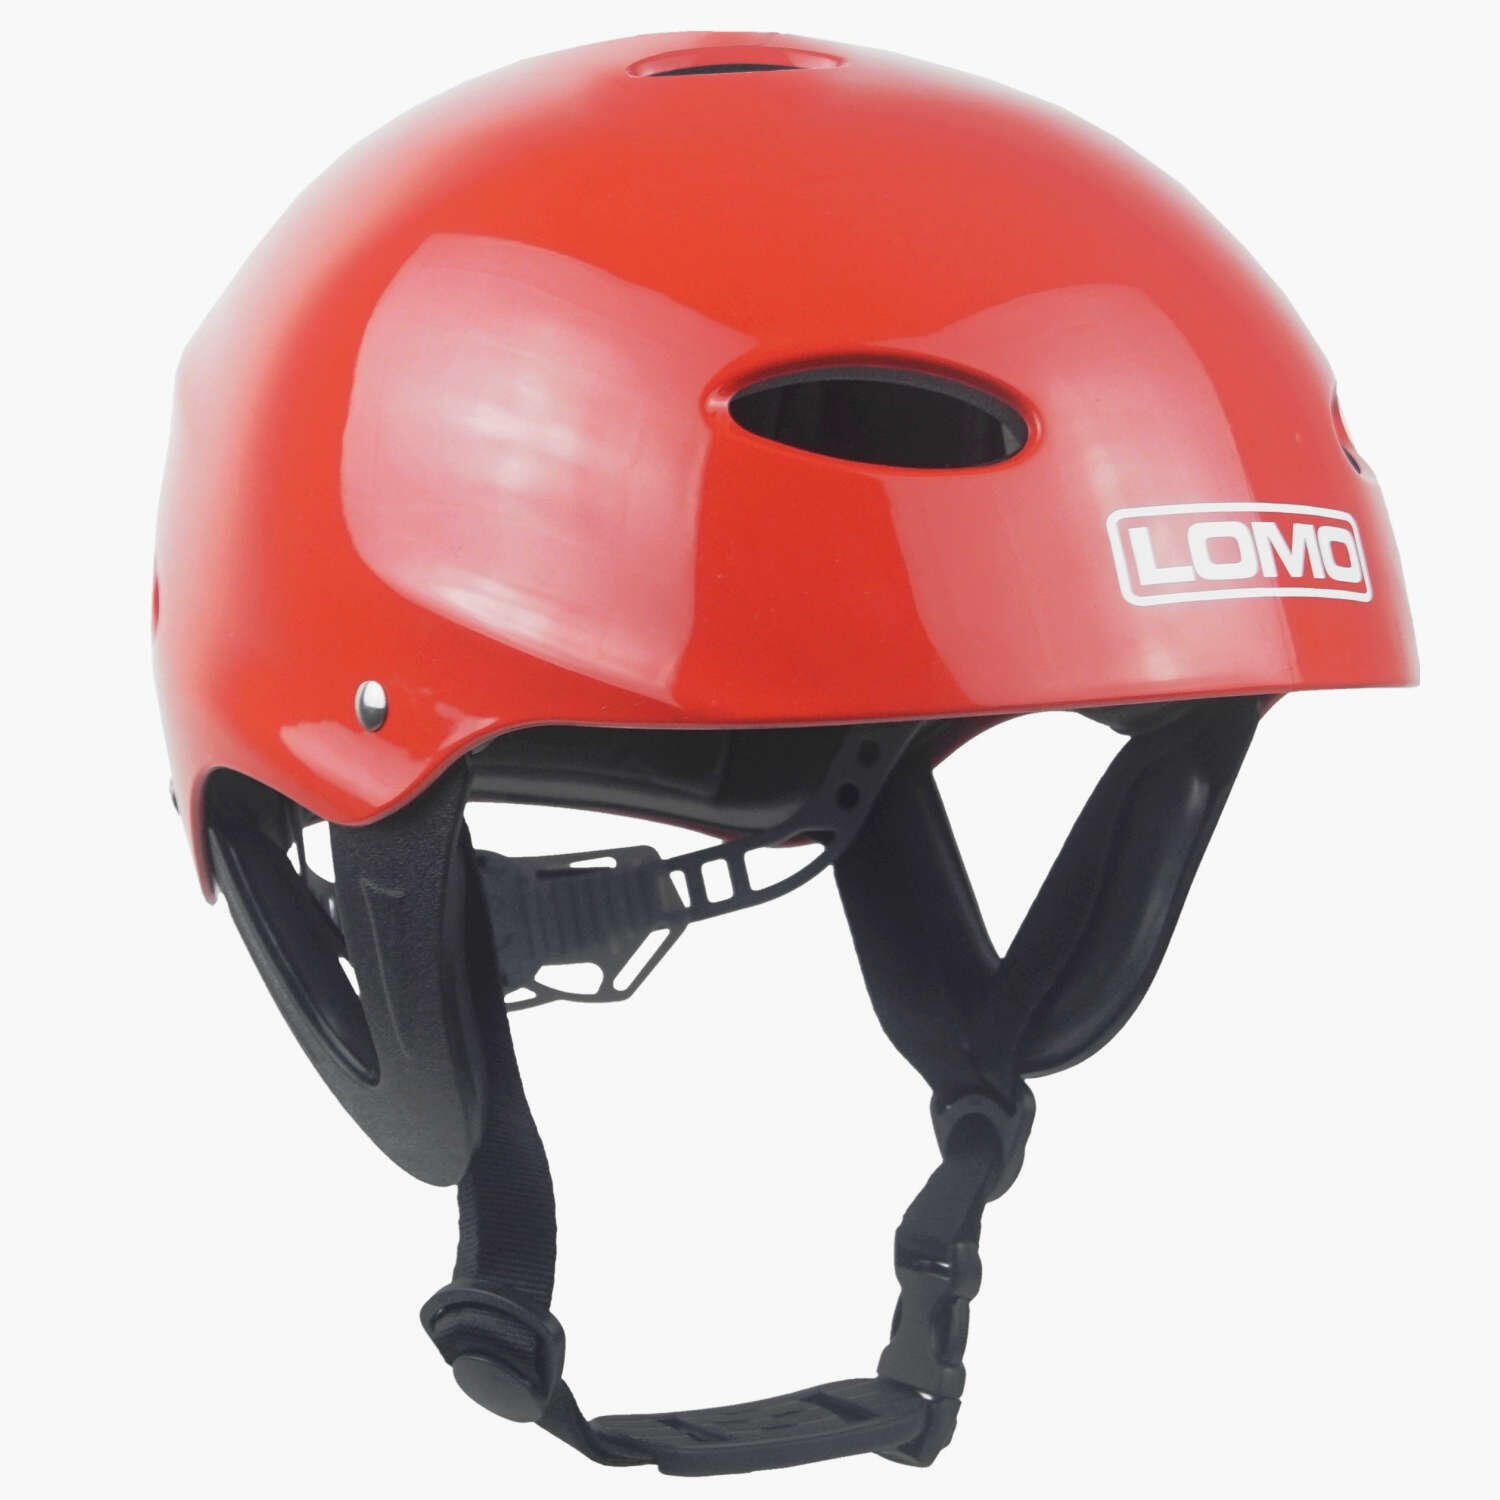 LOMO Lomo Kayak Helmet - Red